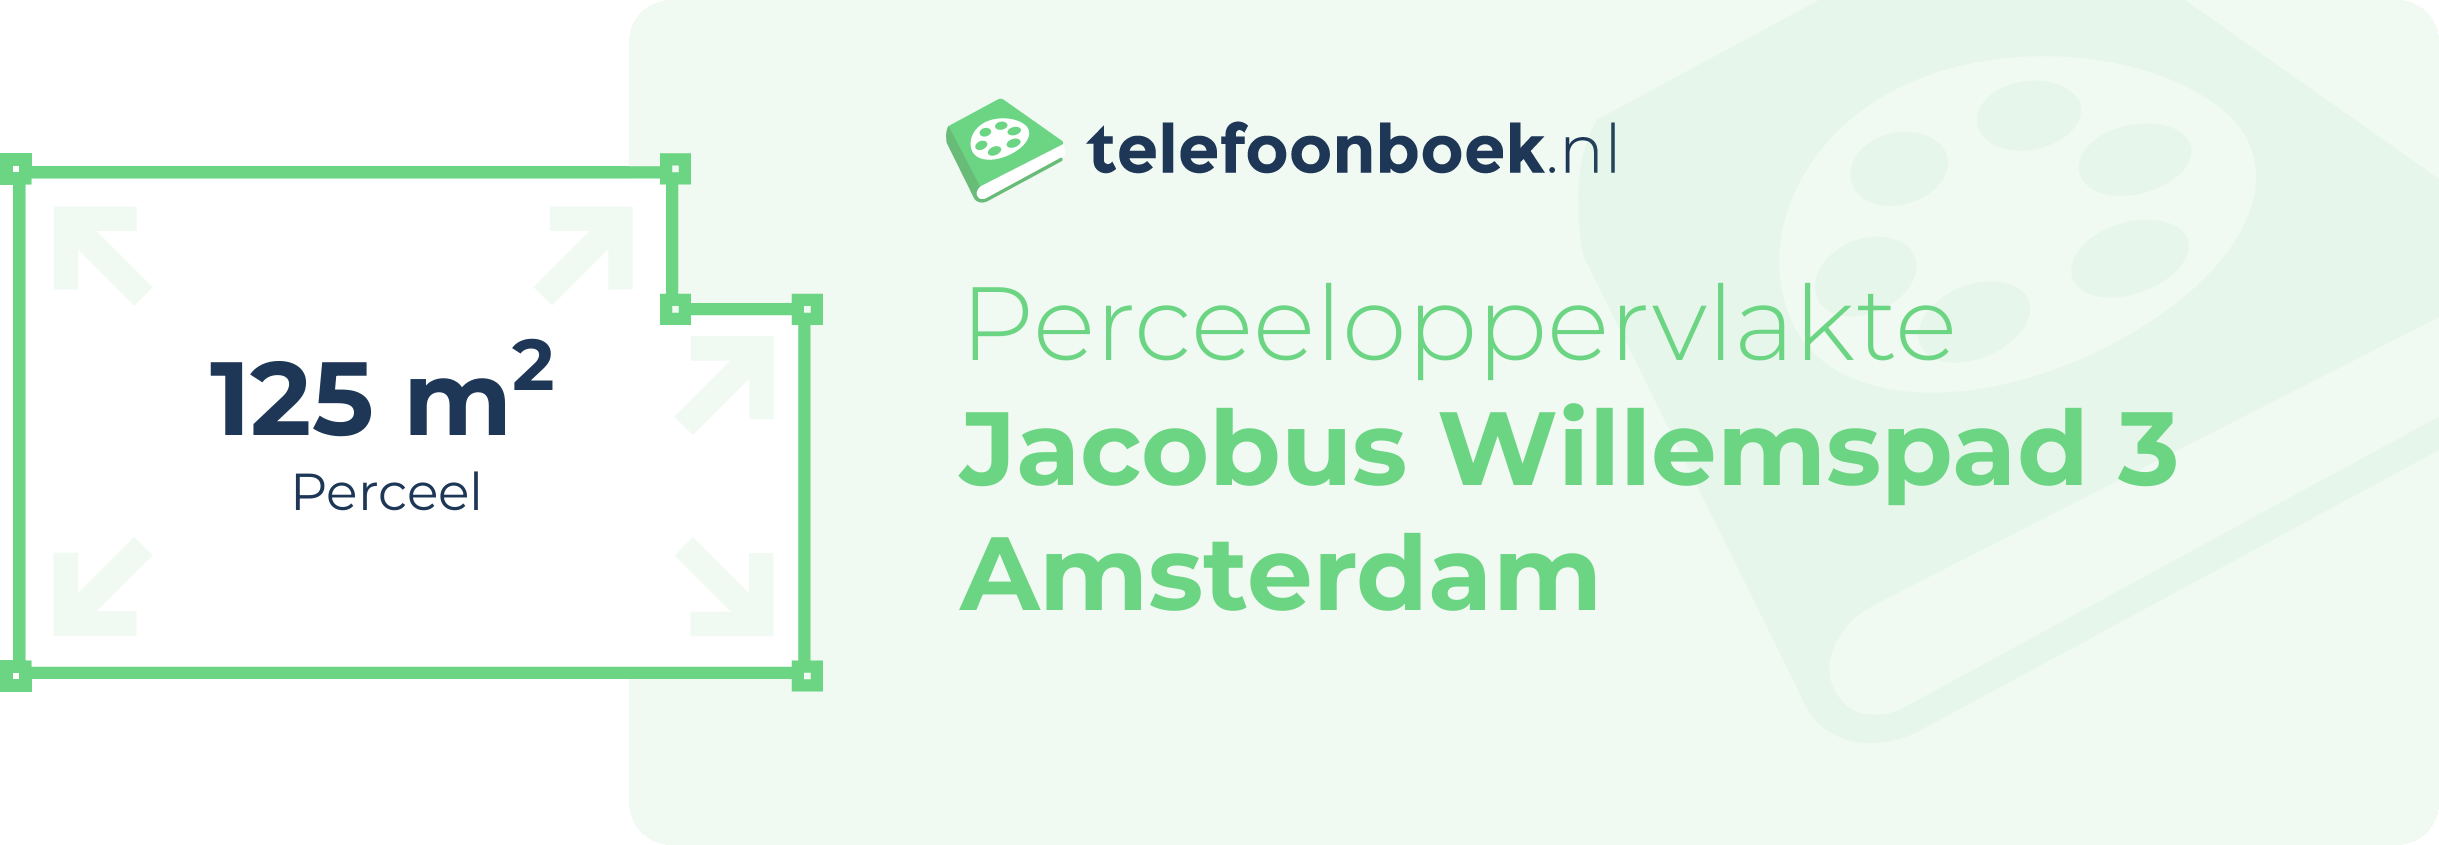 Perceeloppervlakte Jacobus Willemspad 3 Amsterdam